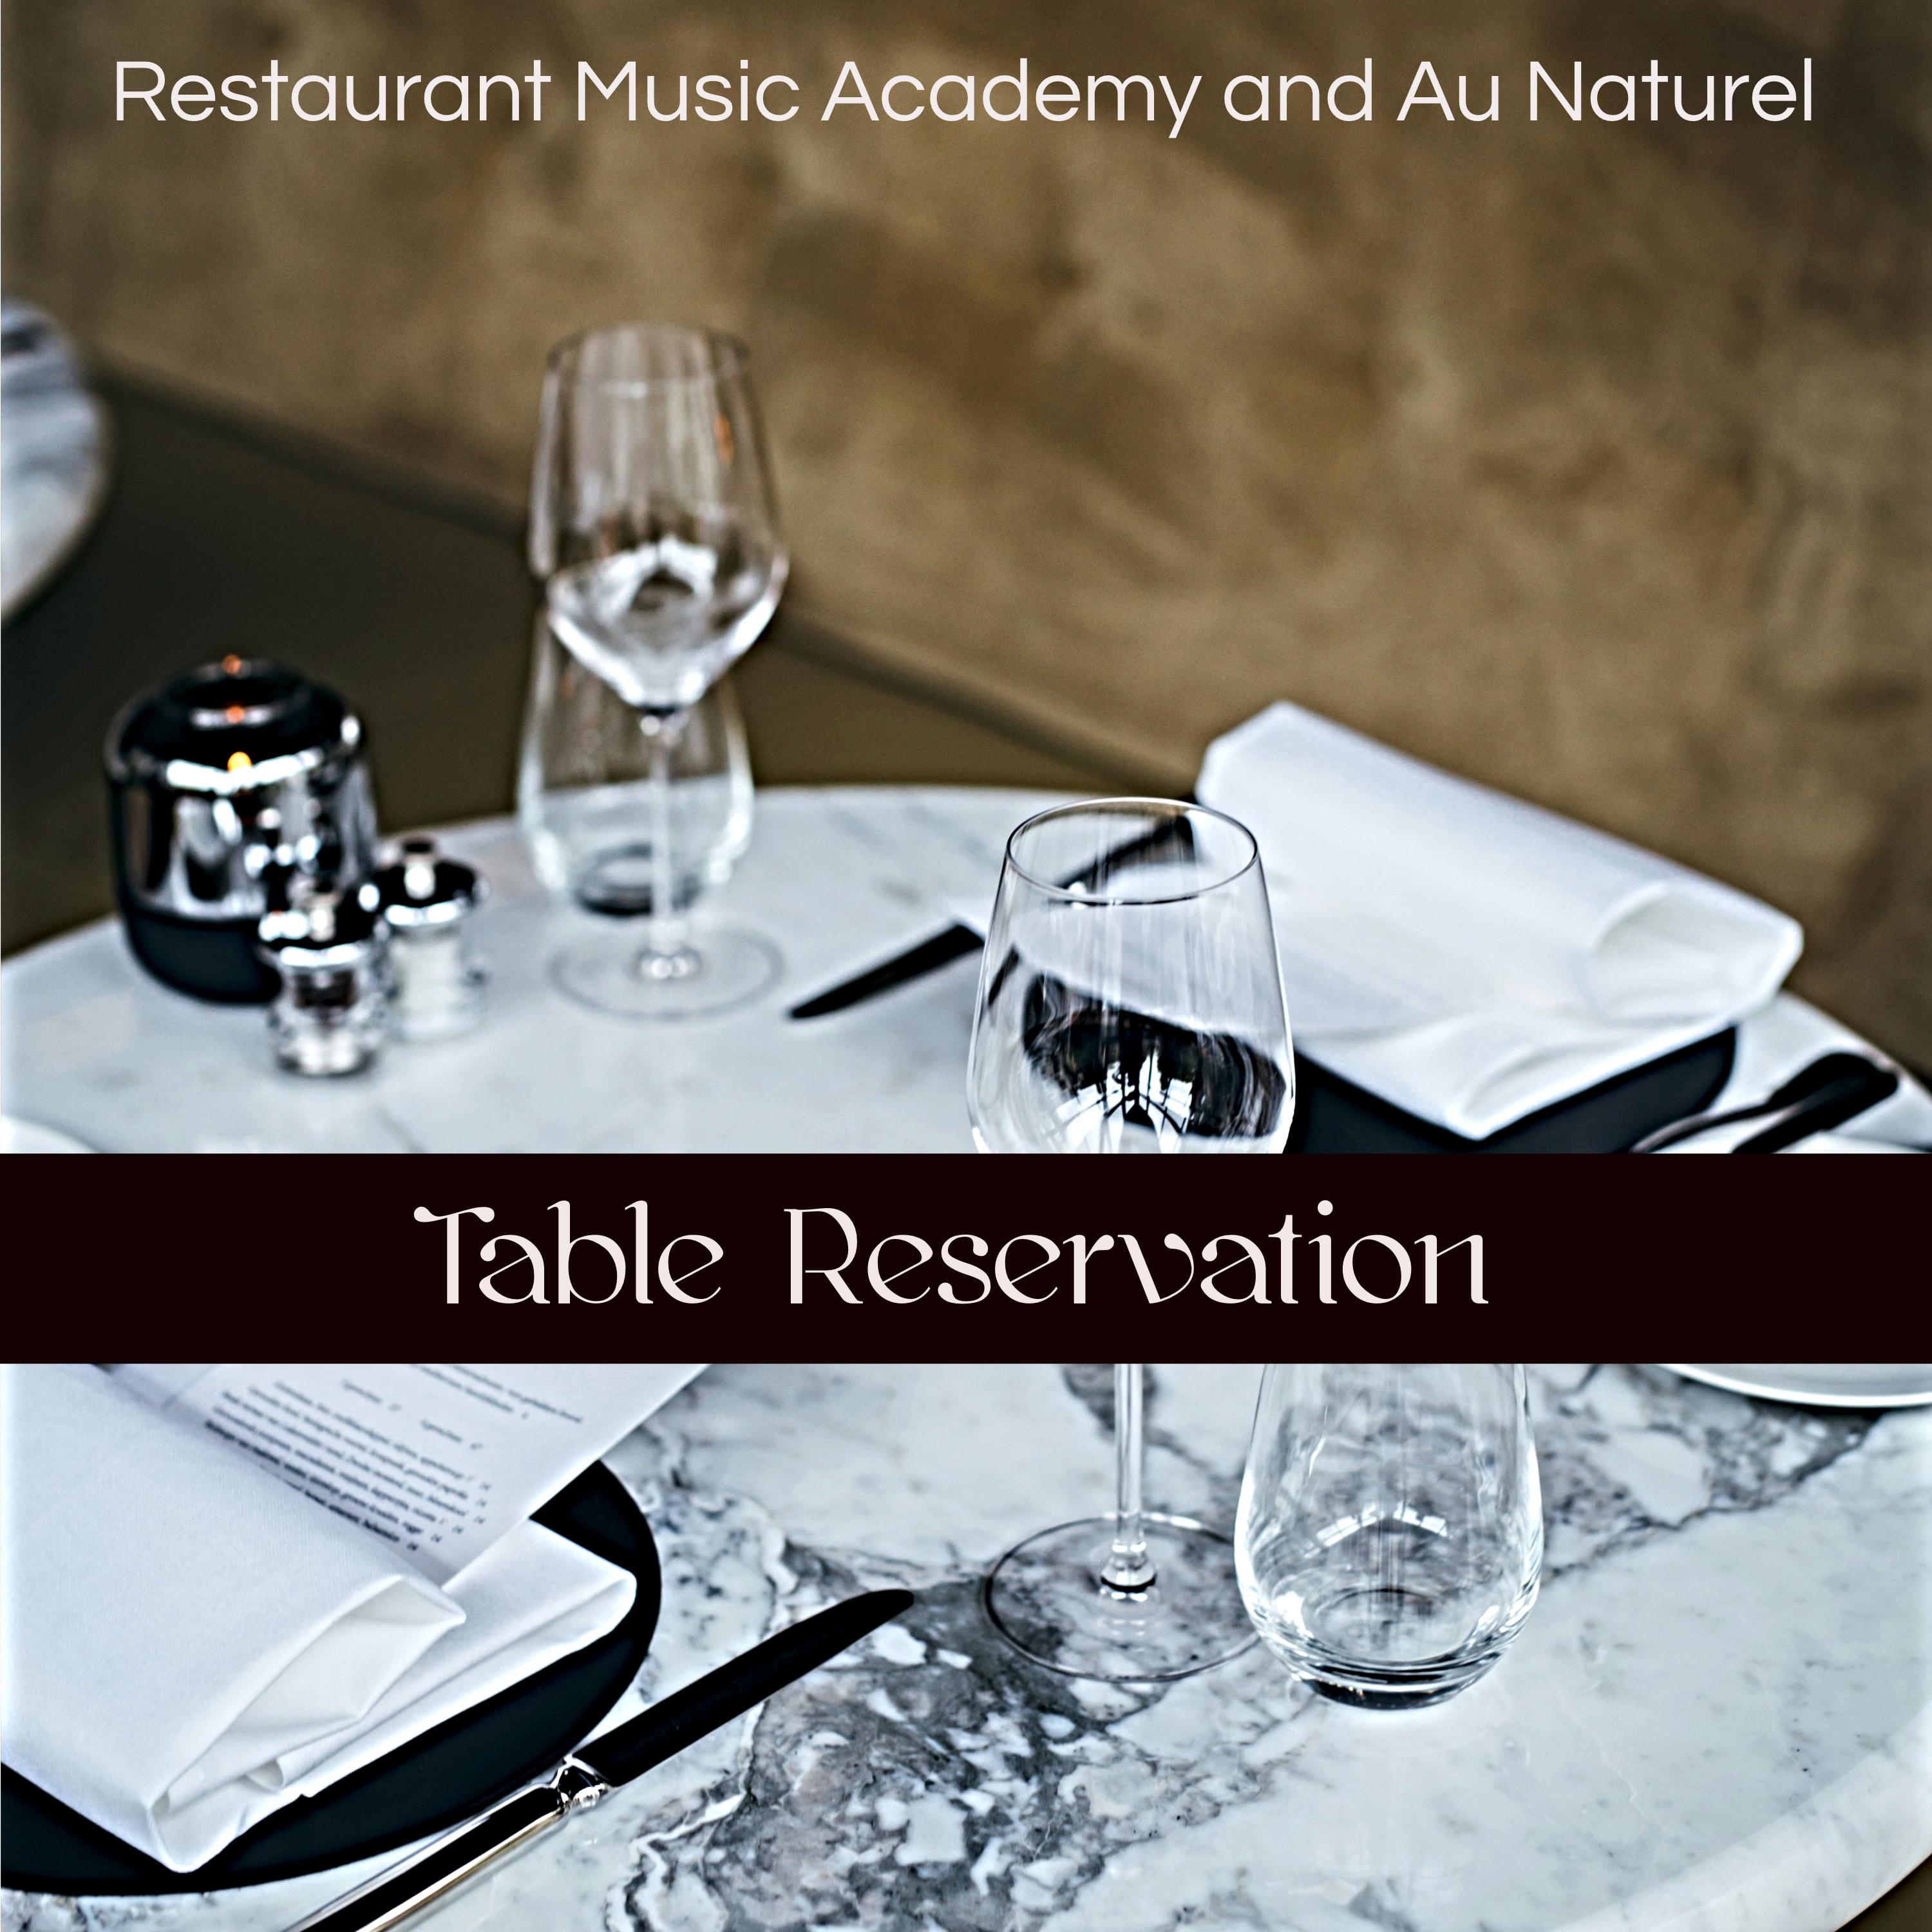 Table Reservation  Bossa Nova Jazz and Piano Bar Restaurant Music Playlist